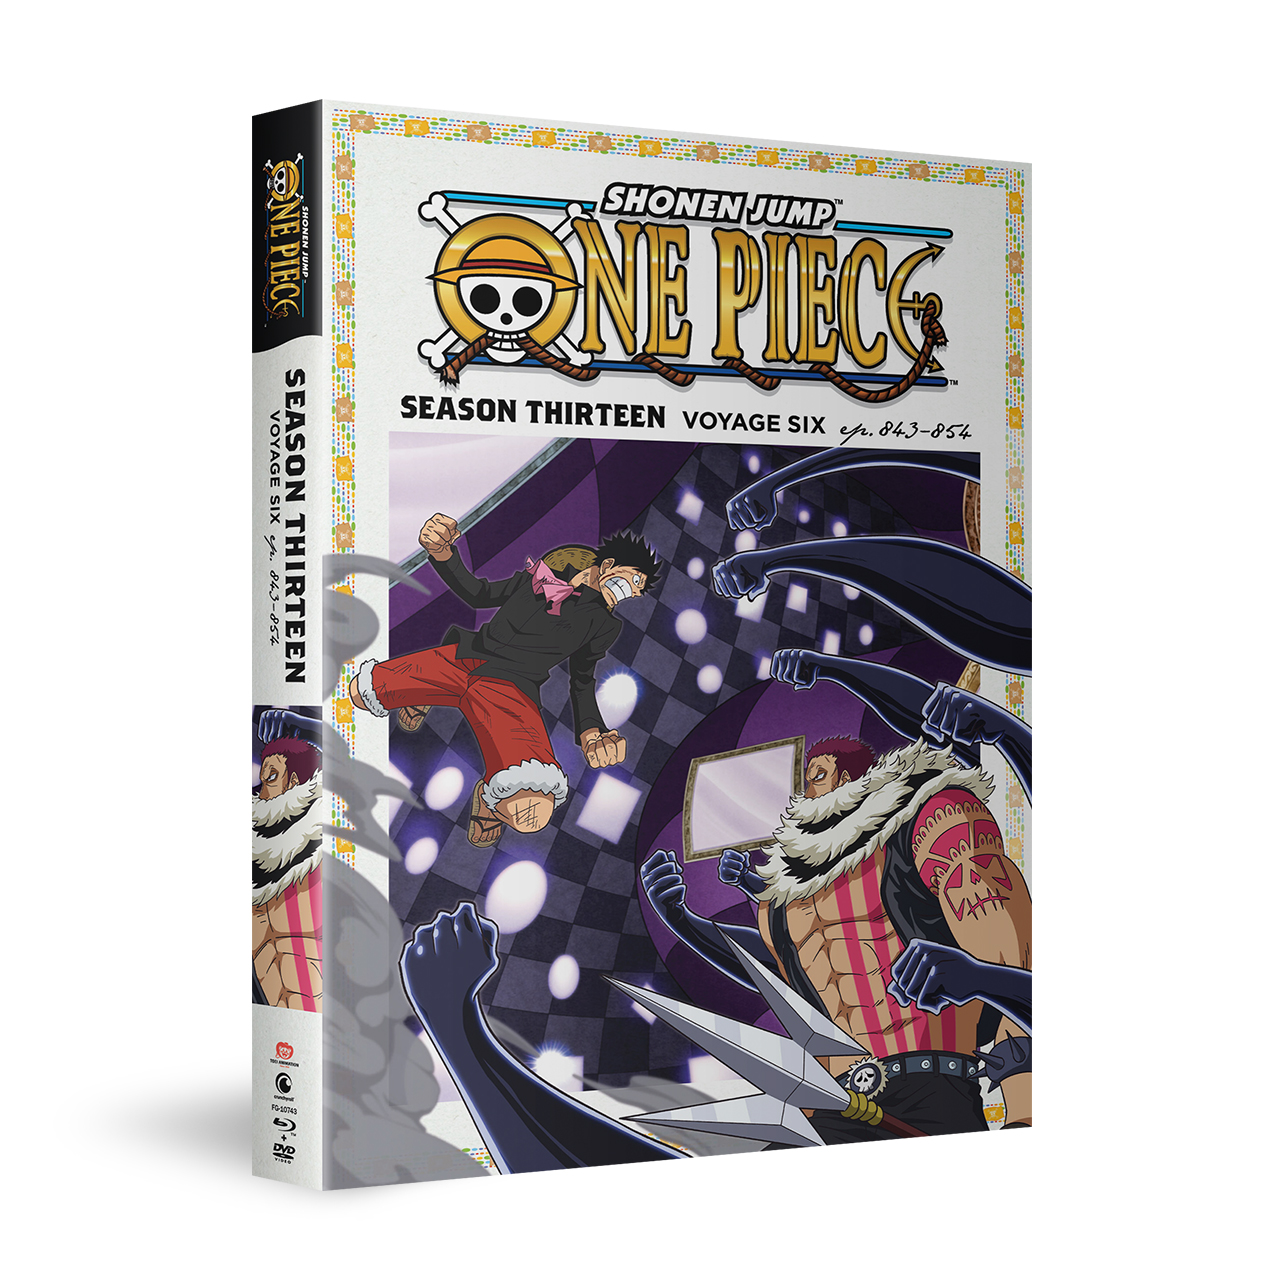 One Piece - Season 13 Voyage 6 - Blu-ray + DVD image count 1